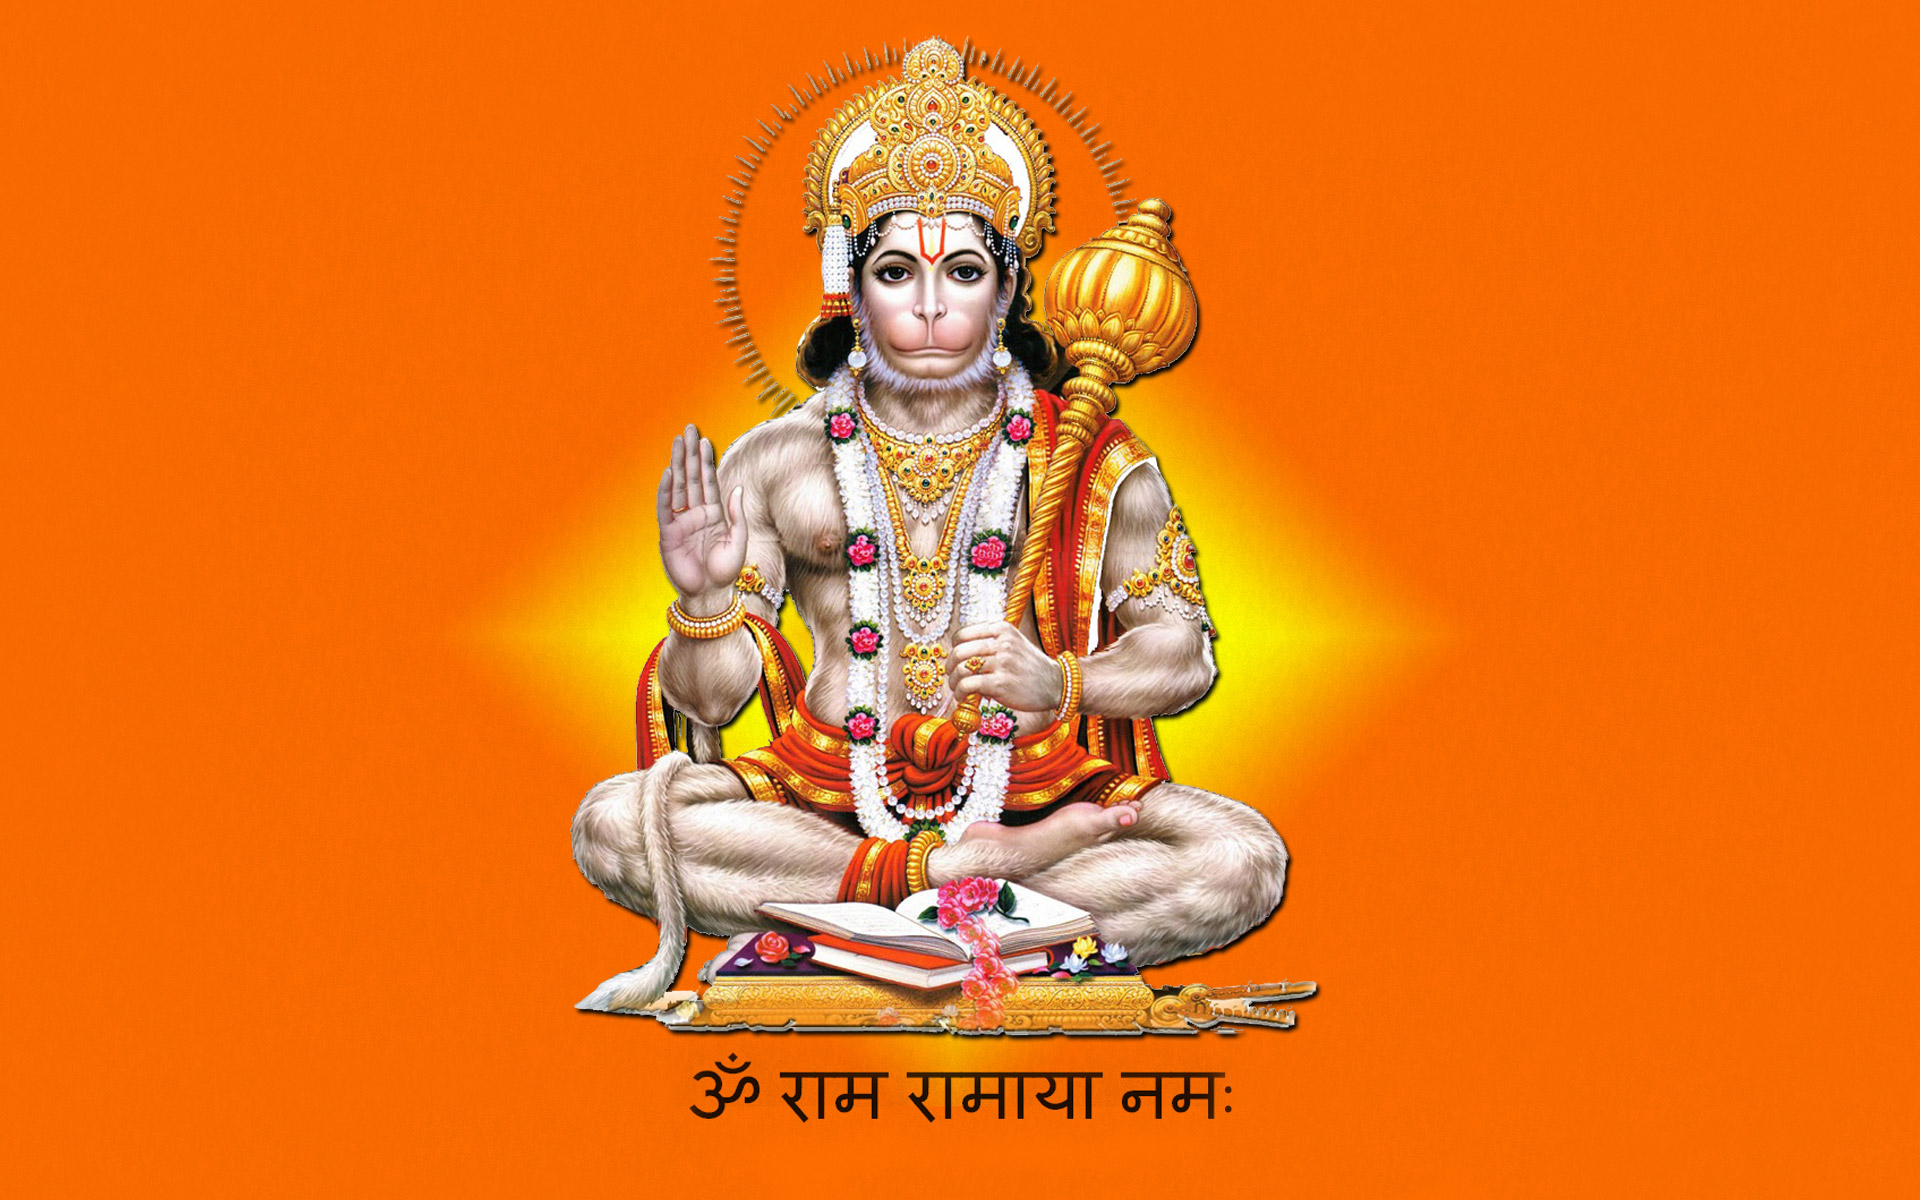 Hanuman Jayanti Celebrating Hanuman The Monkey God Indoindians Com